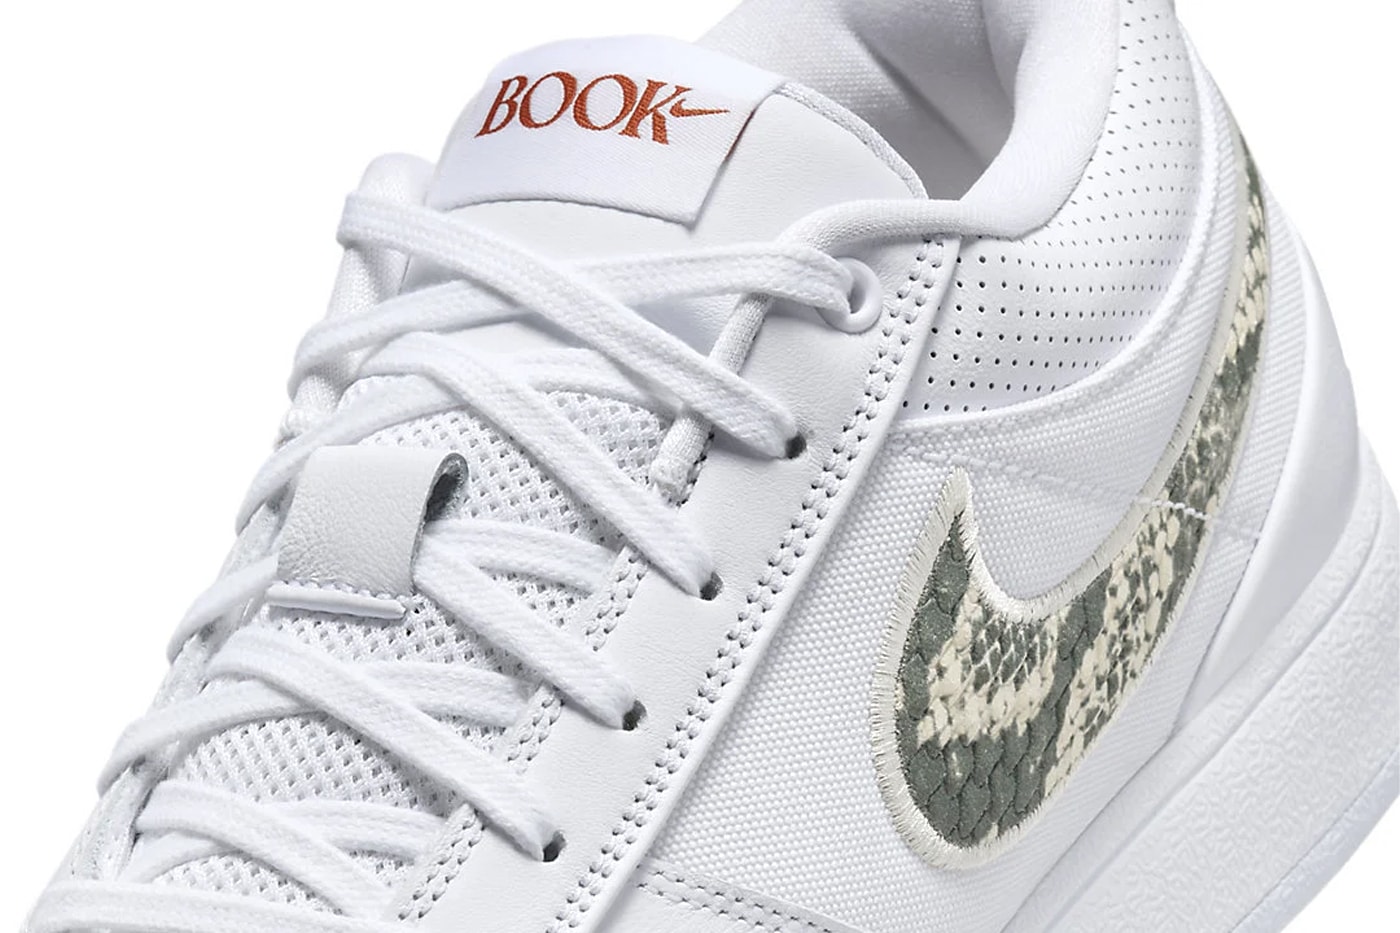 Nike Book 1 "Rattlesnake" Has an Official Spring Release Date may 2024 devin booker nba phoenix suns desert haven footwear basektball shoe symbolic FJ4249-101